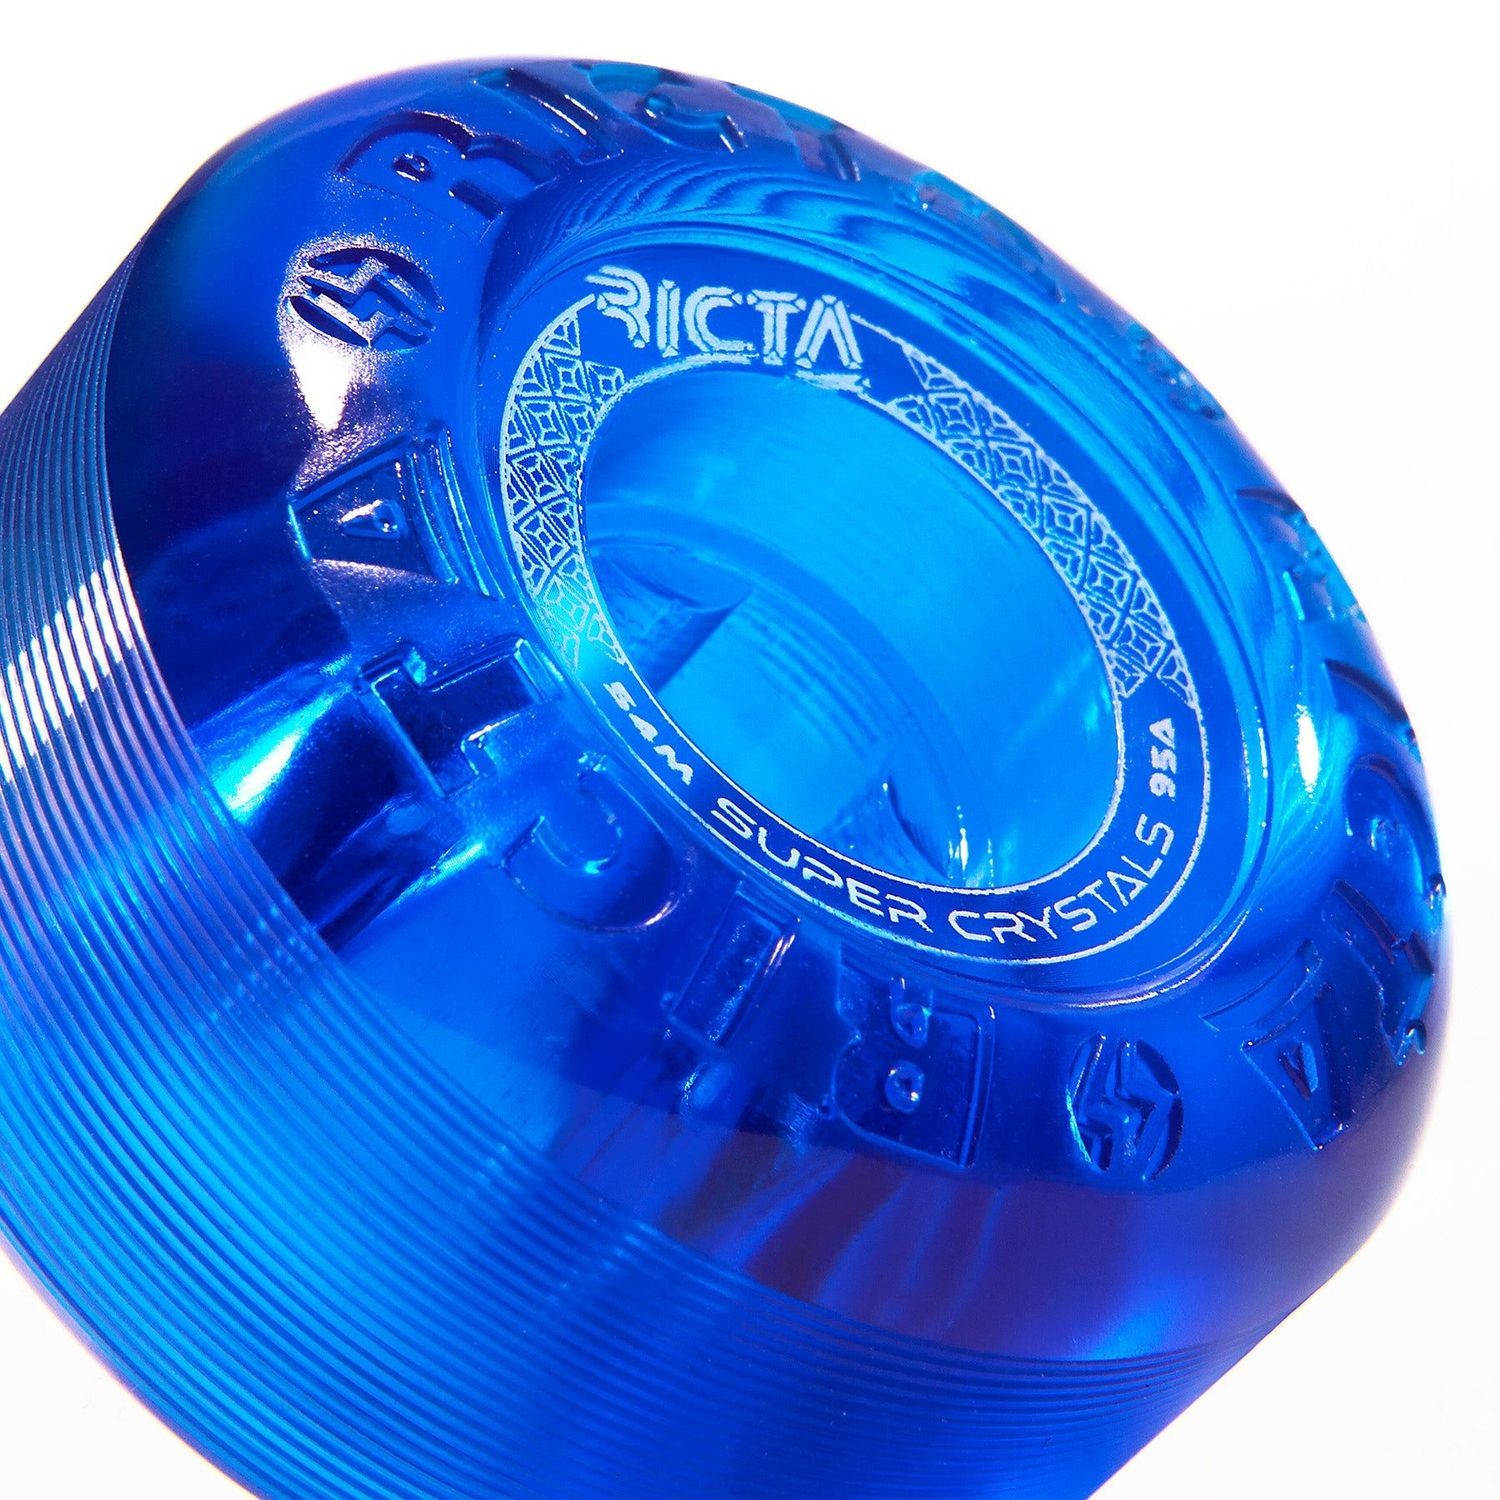 Ricta 54mm Super Crs Tpg 95a Skate Wheel